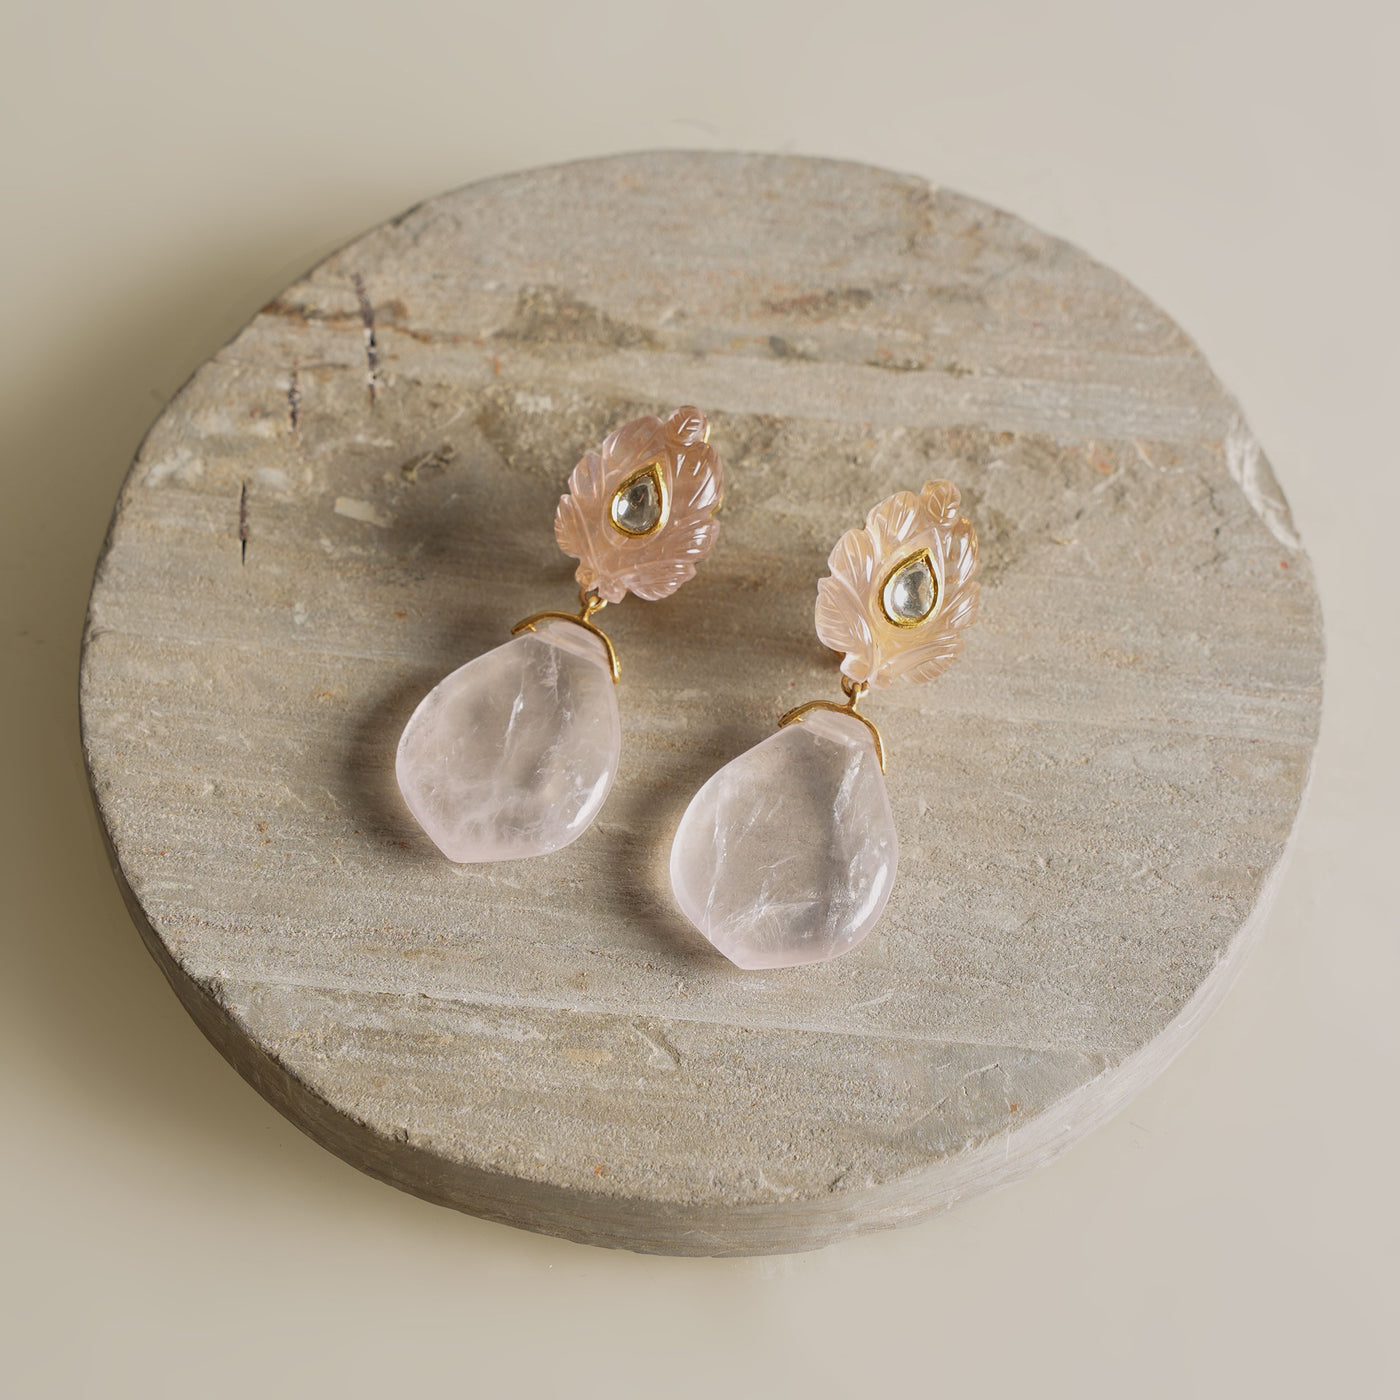 ZAYN BY SUNENA carved rose qaurtz with polkis earrings